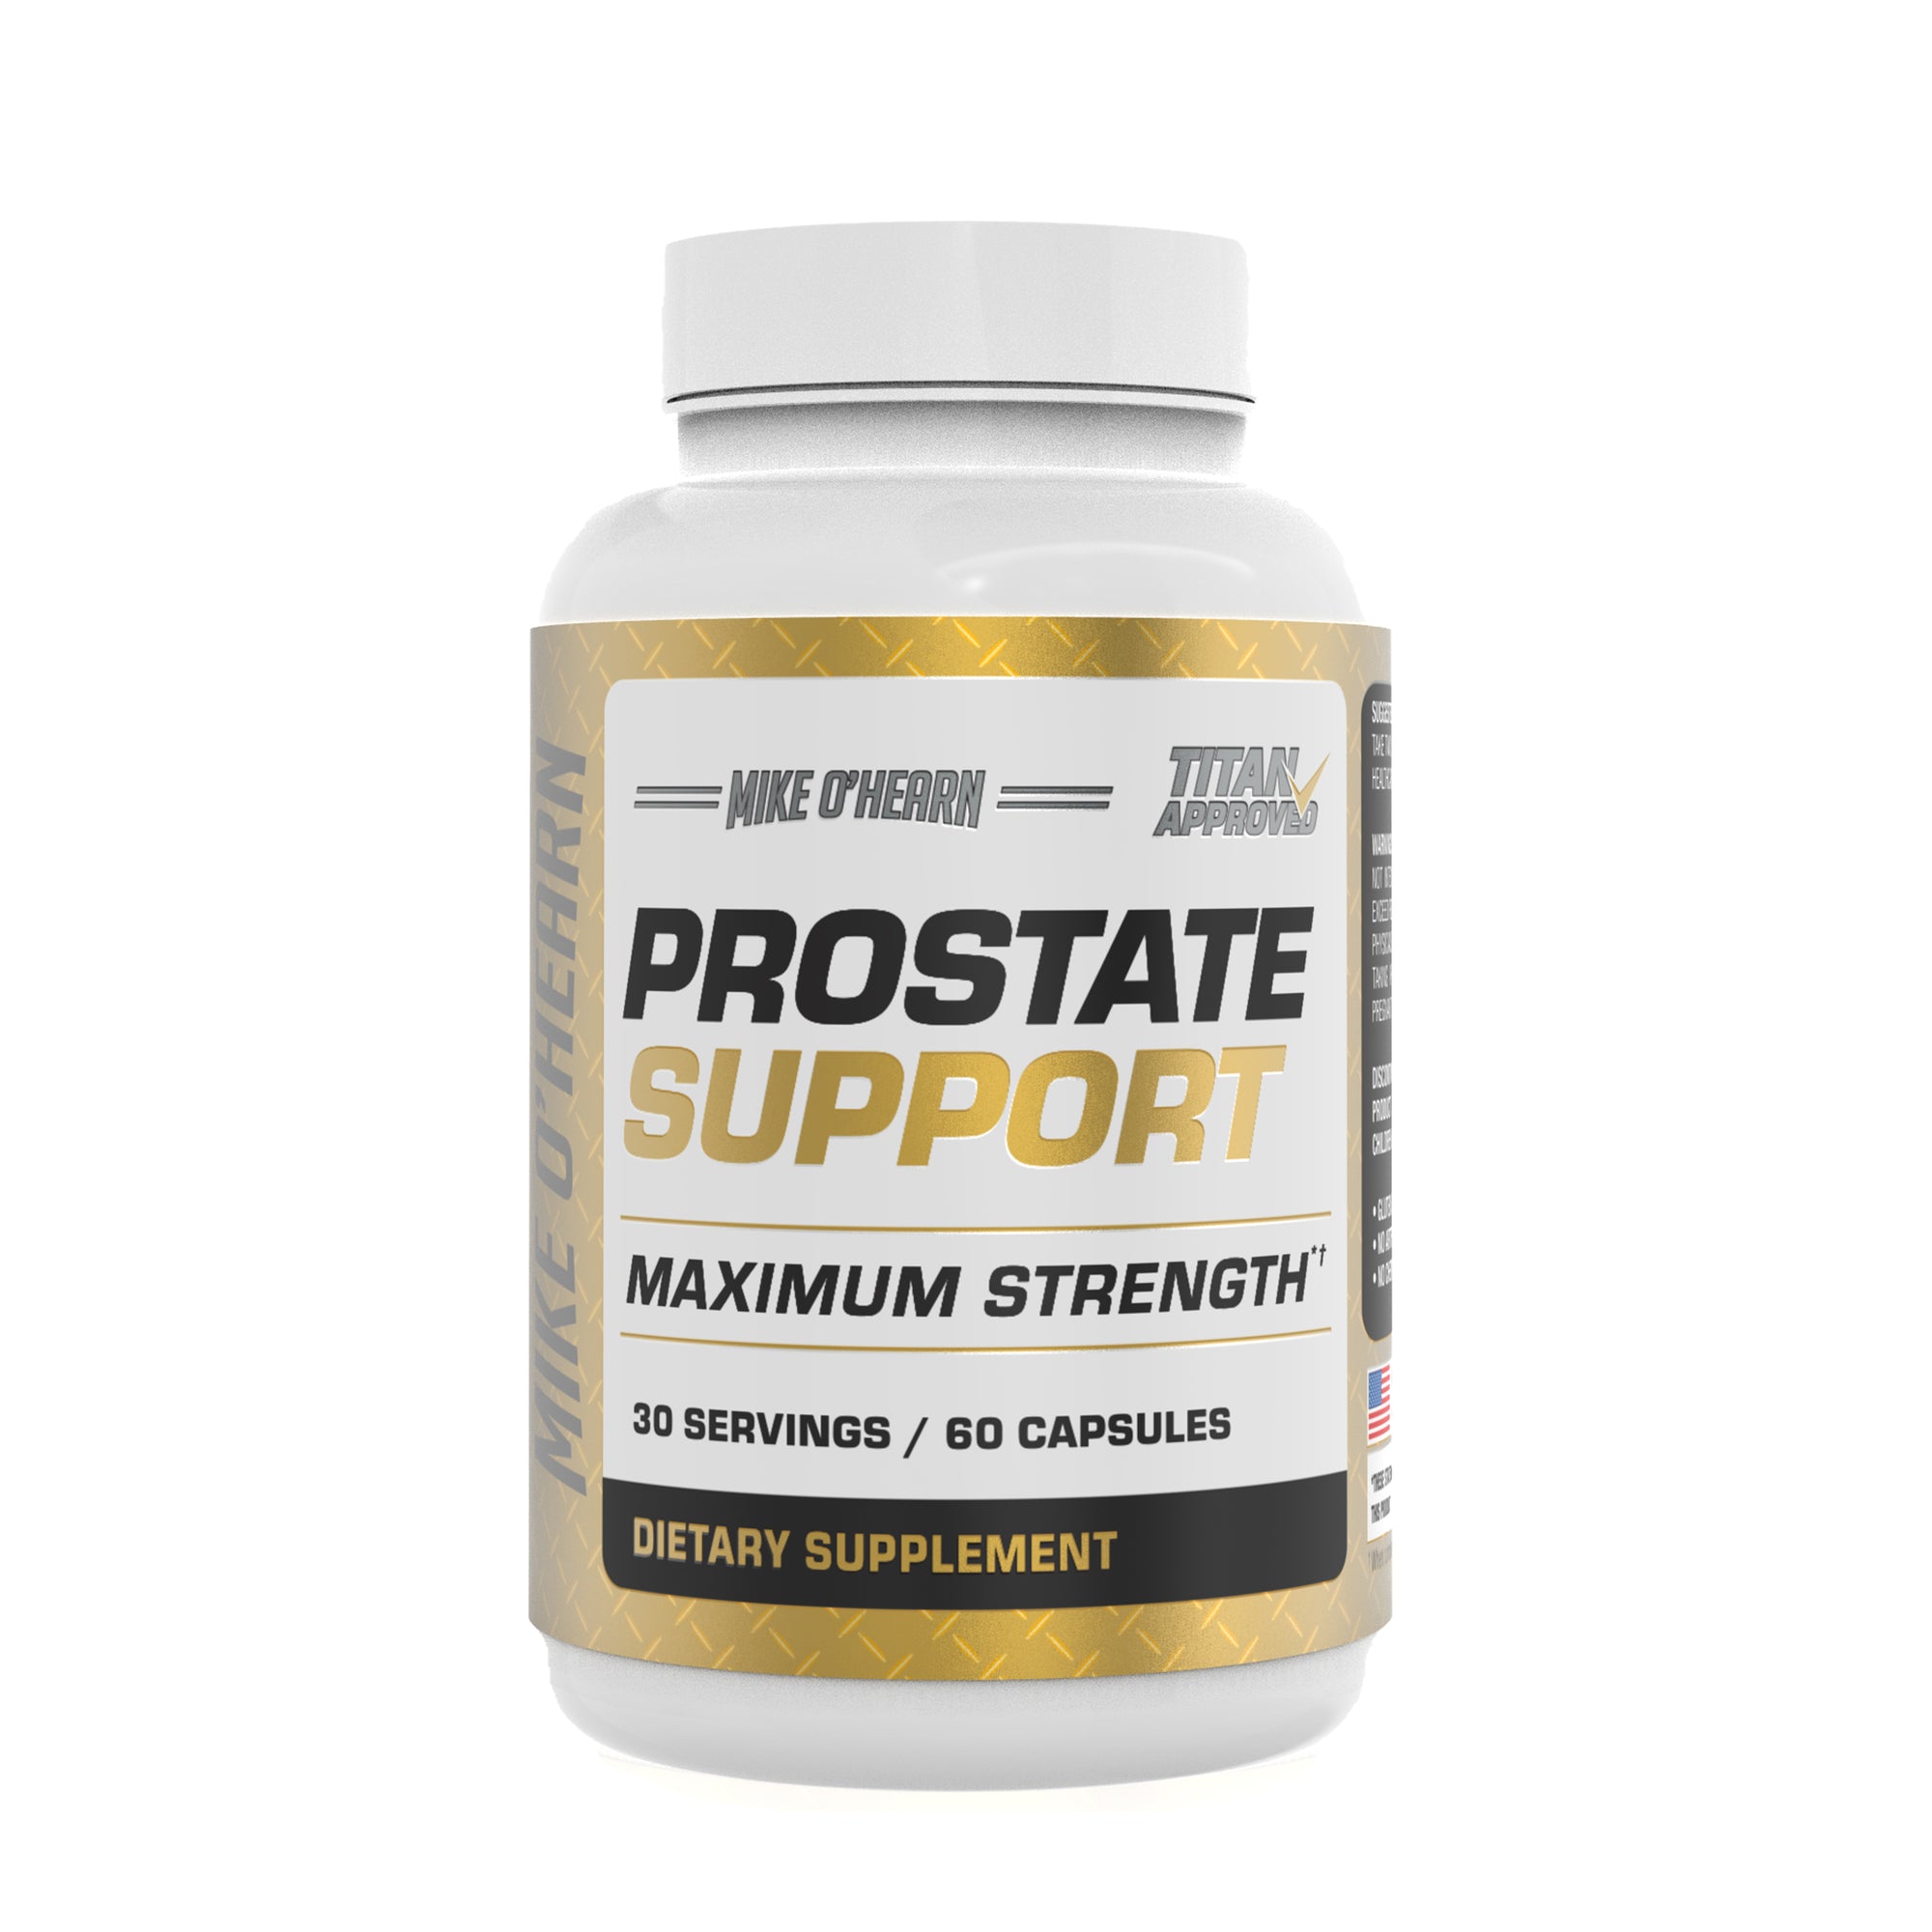 Prostate support capsule bottle. Maximum Strength 30 servings / 60 capsules